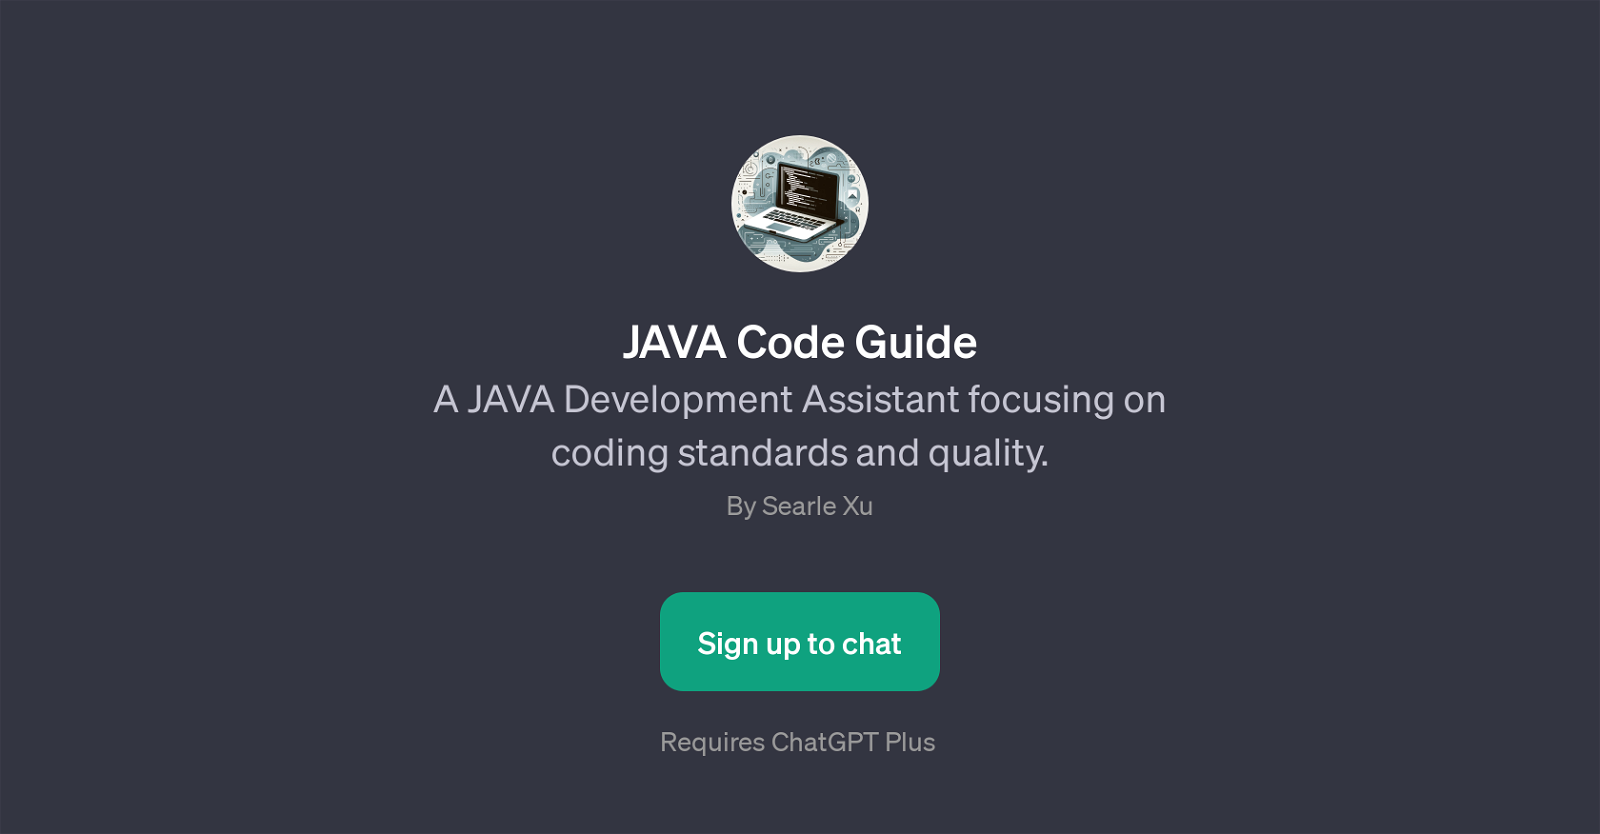 JAVA Code Guide website